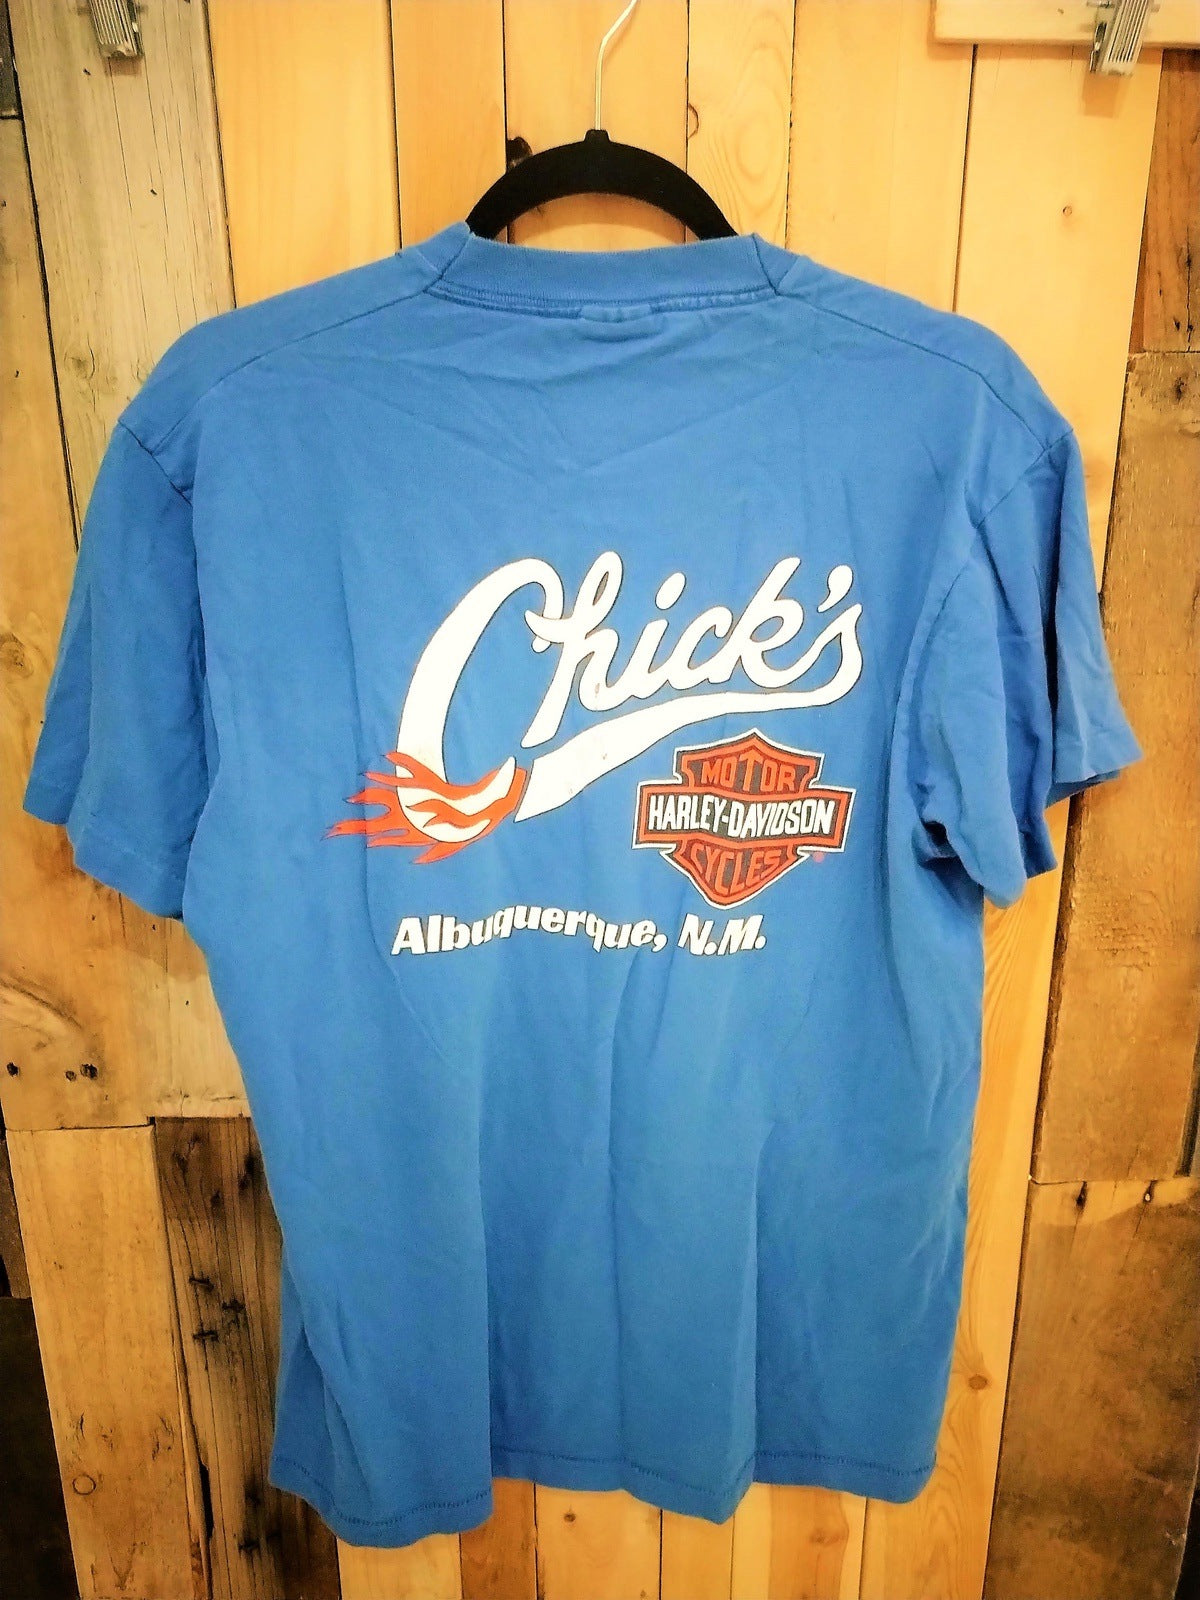 Vintage Harley Davidson Men's T Shirt "Chicks" Albuquerque N.M. Size Large